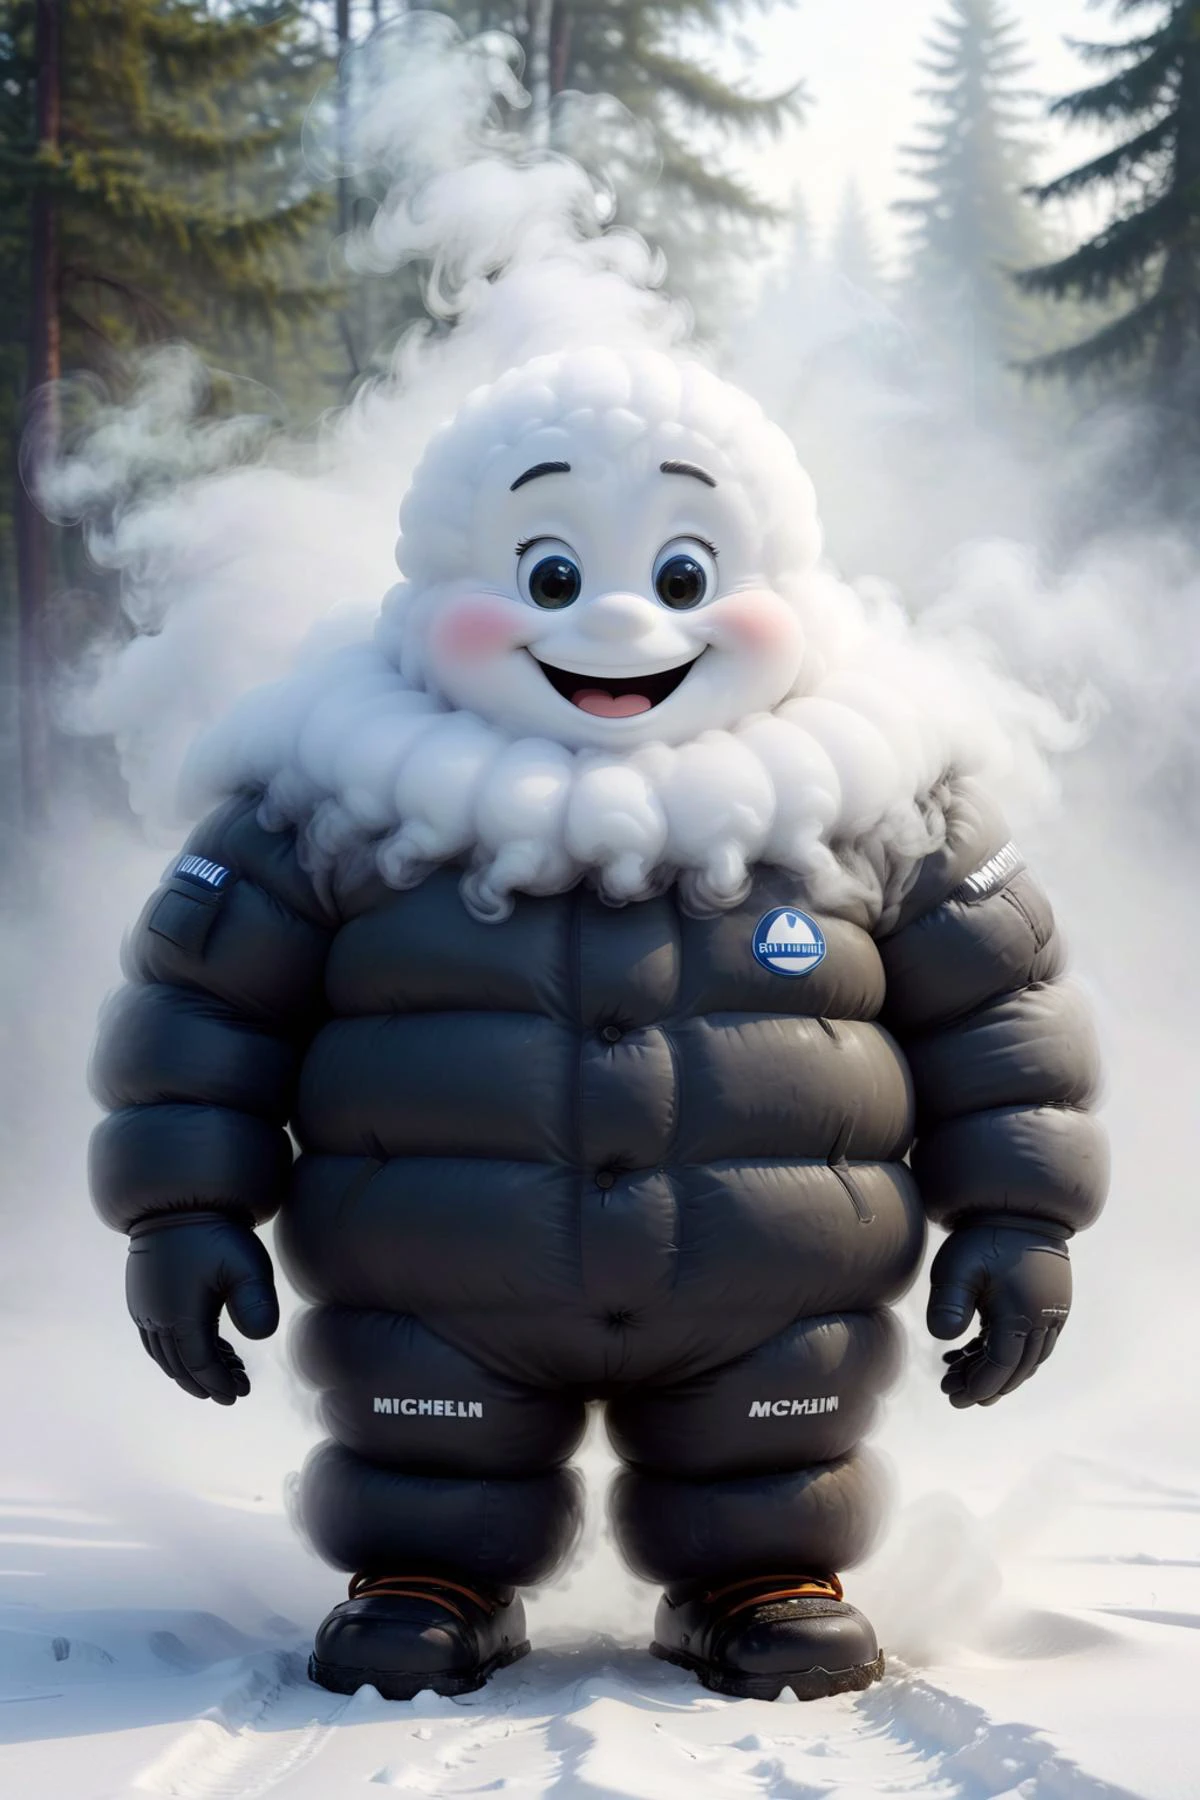 cute Michelin made of 多霧路段, 雪 land, 雪, 雪ing, 滑雪,
消息, 多霧路段, 抽烟,